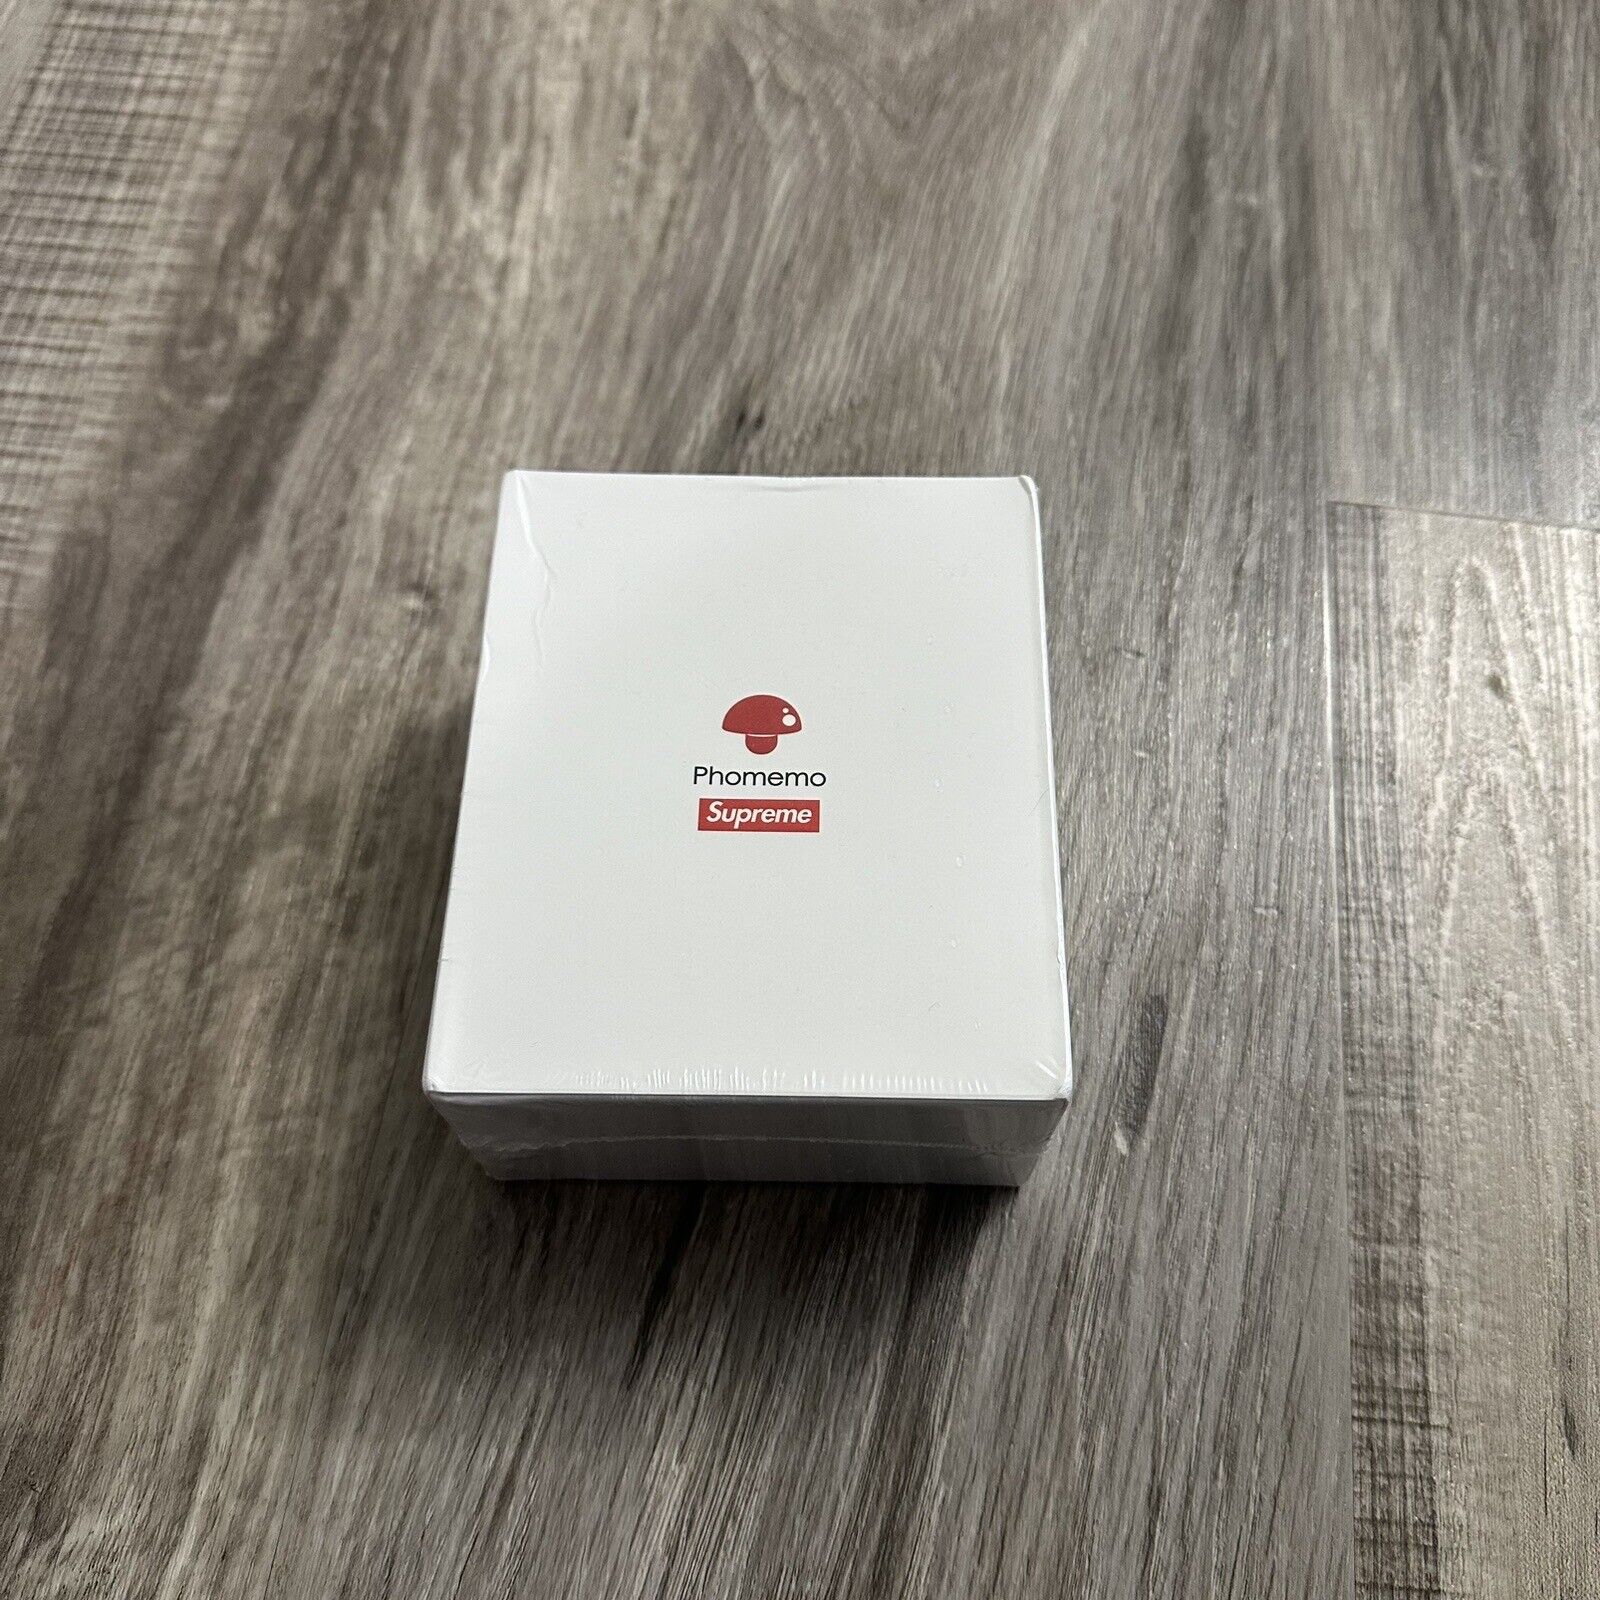 Supreme Phomemo Red Pocket Printer FW21  - Brand New